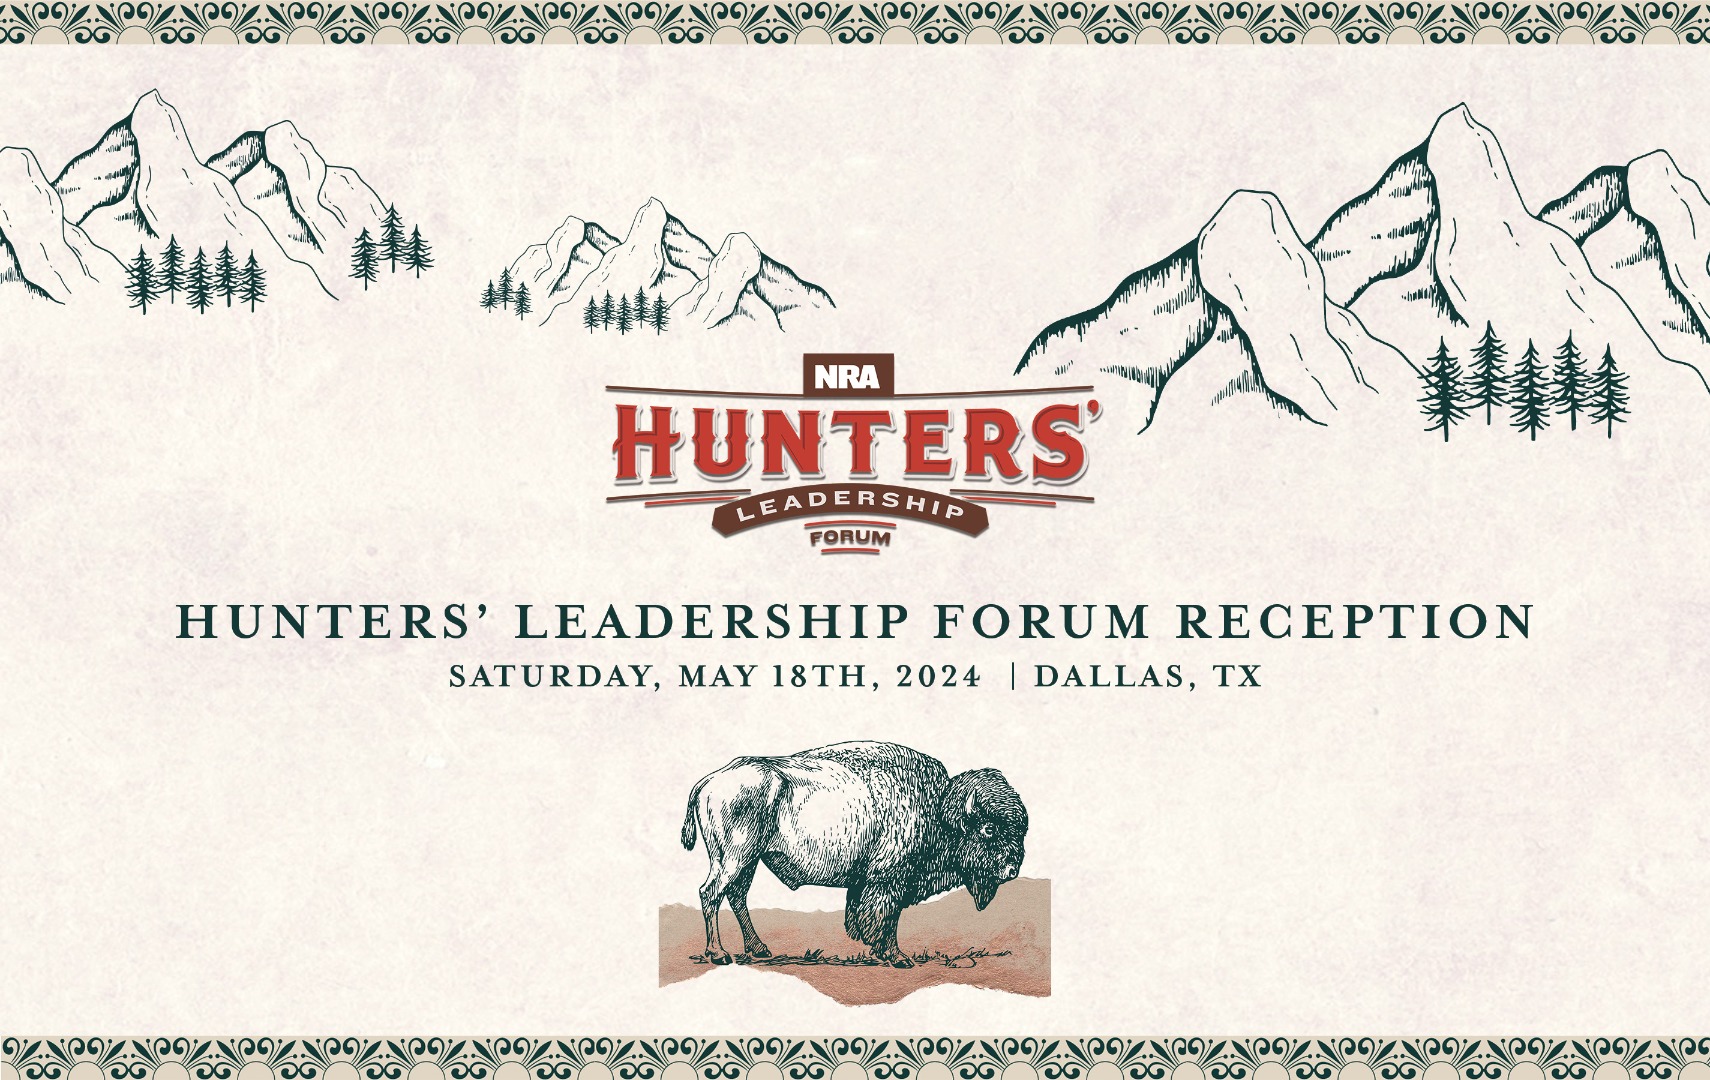 Hunters’ Leadership Forum Reception